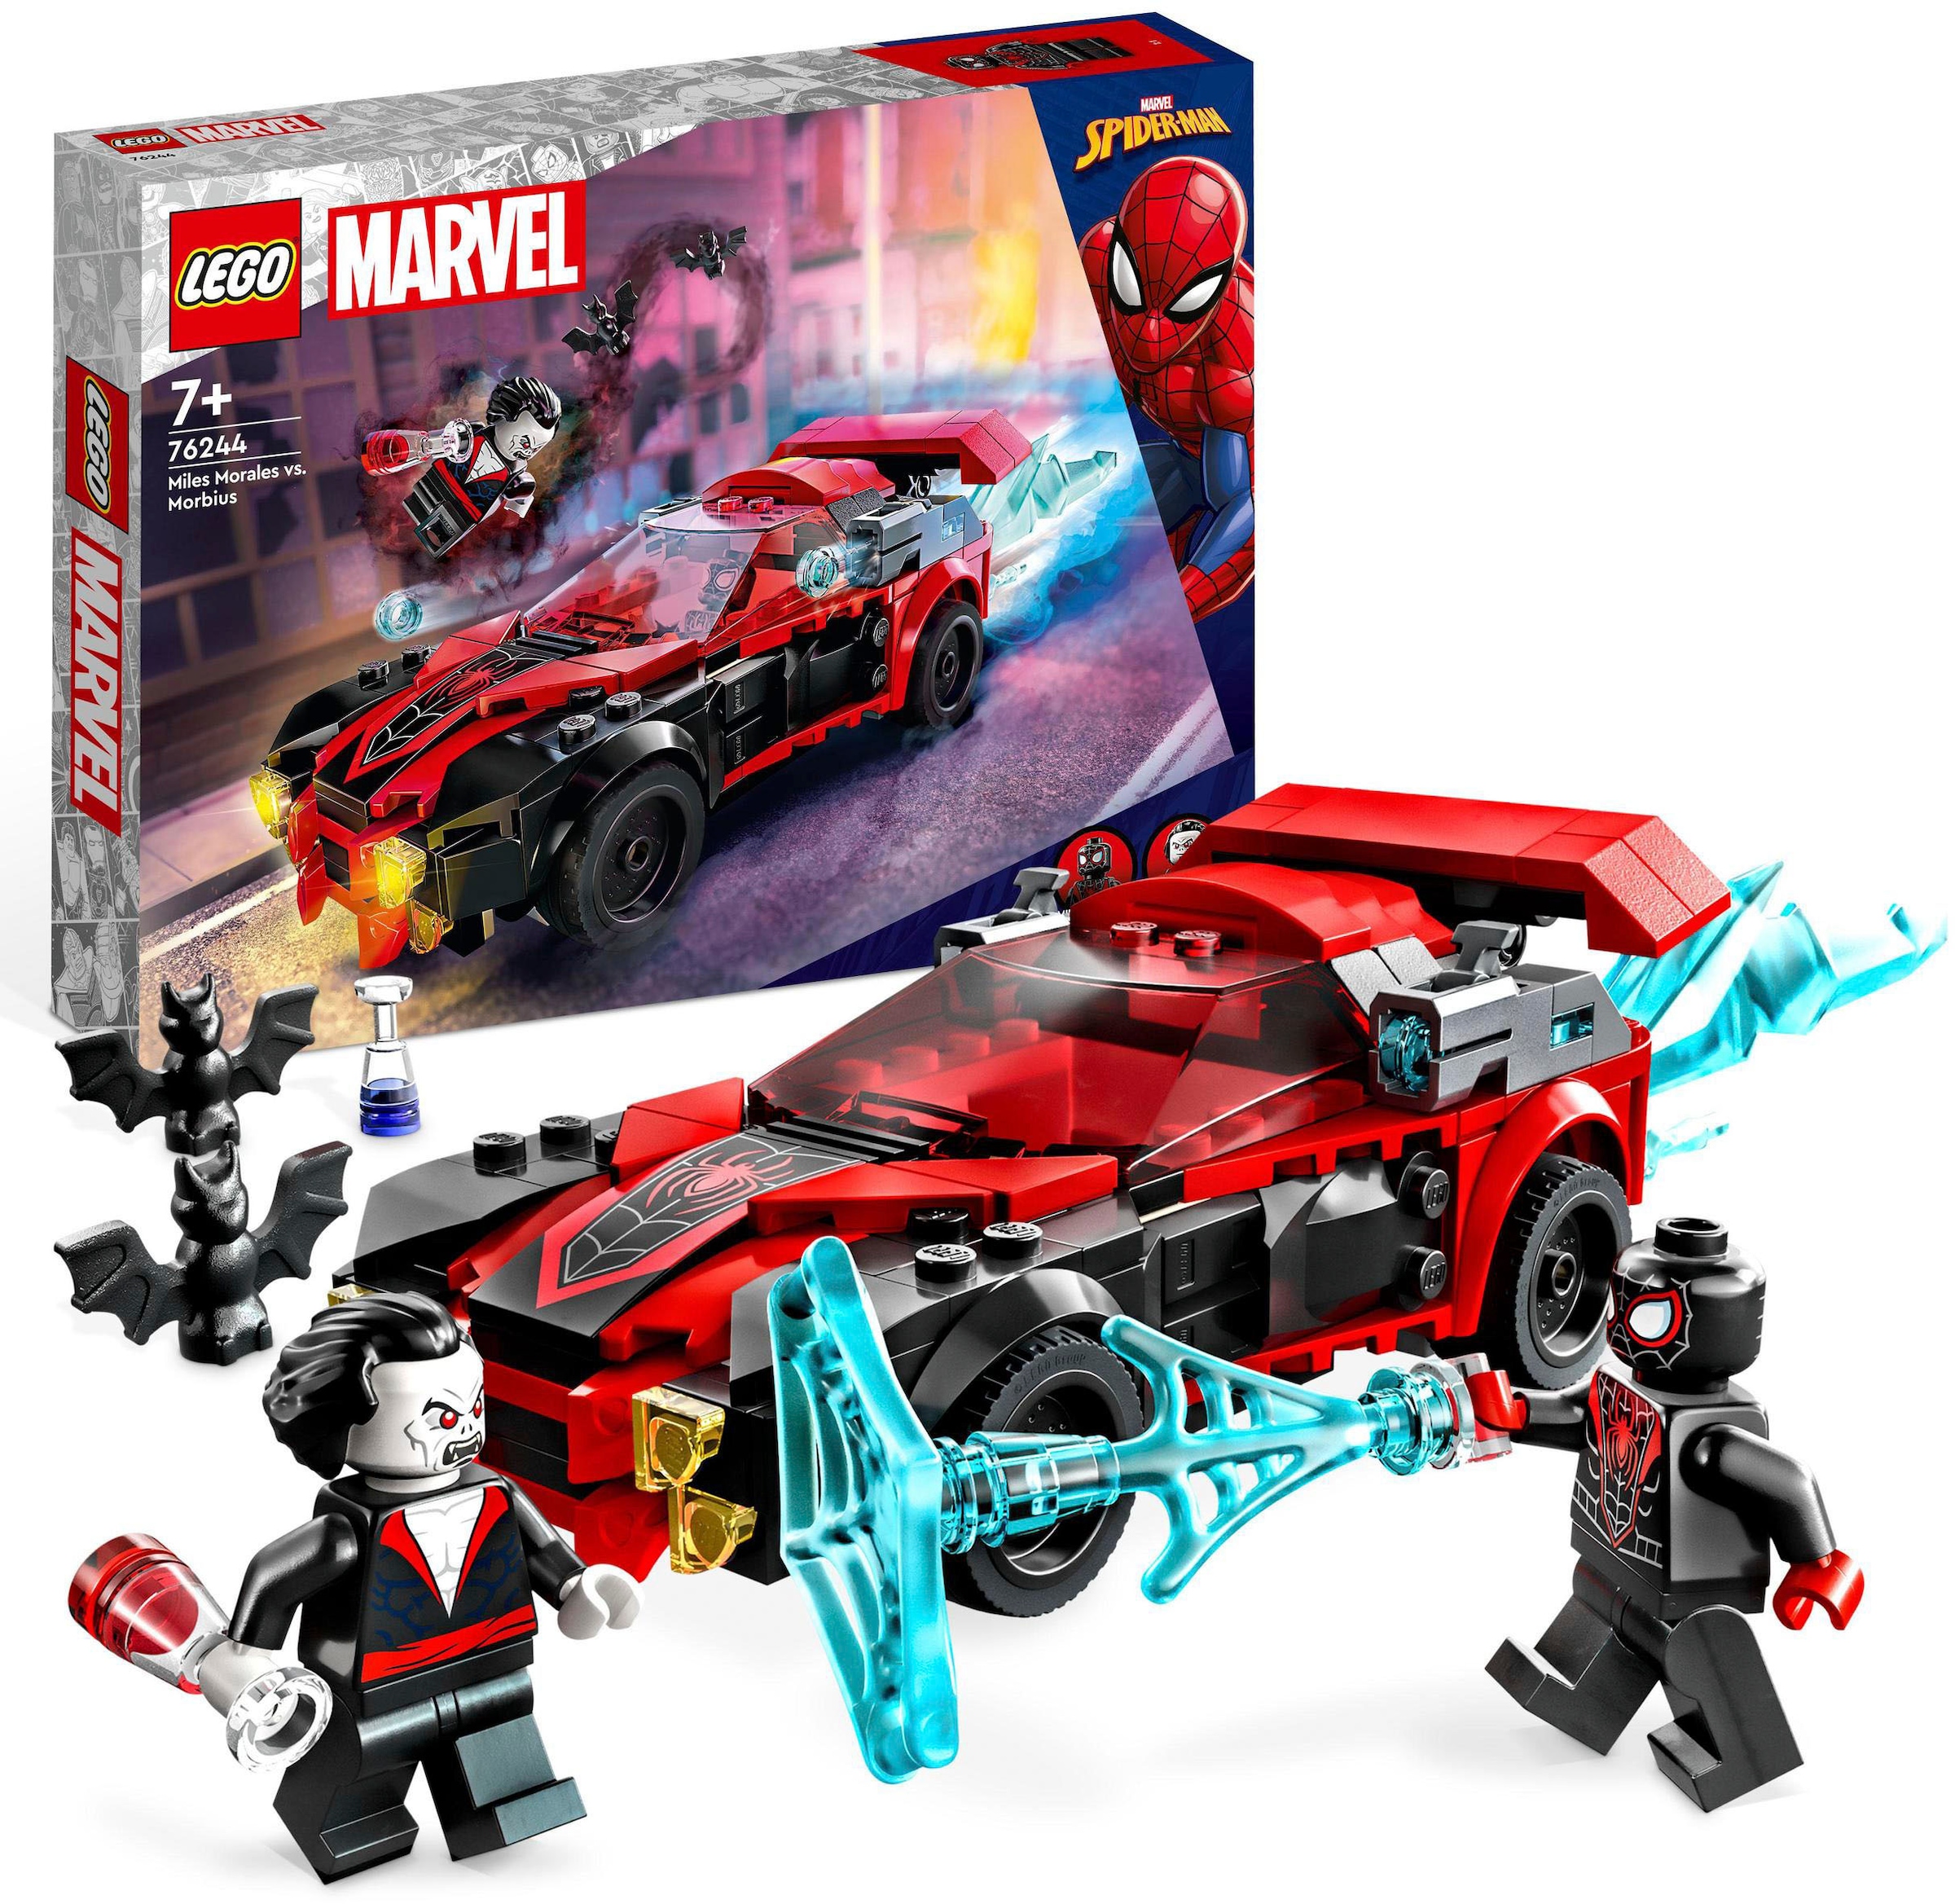 Konstruktionsspielsteine »Miles Morales vs. Morbius (76244), LEGO® Marvel«, (220 St.),...